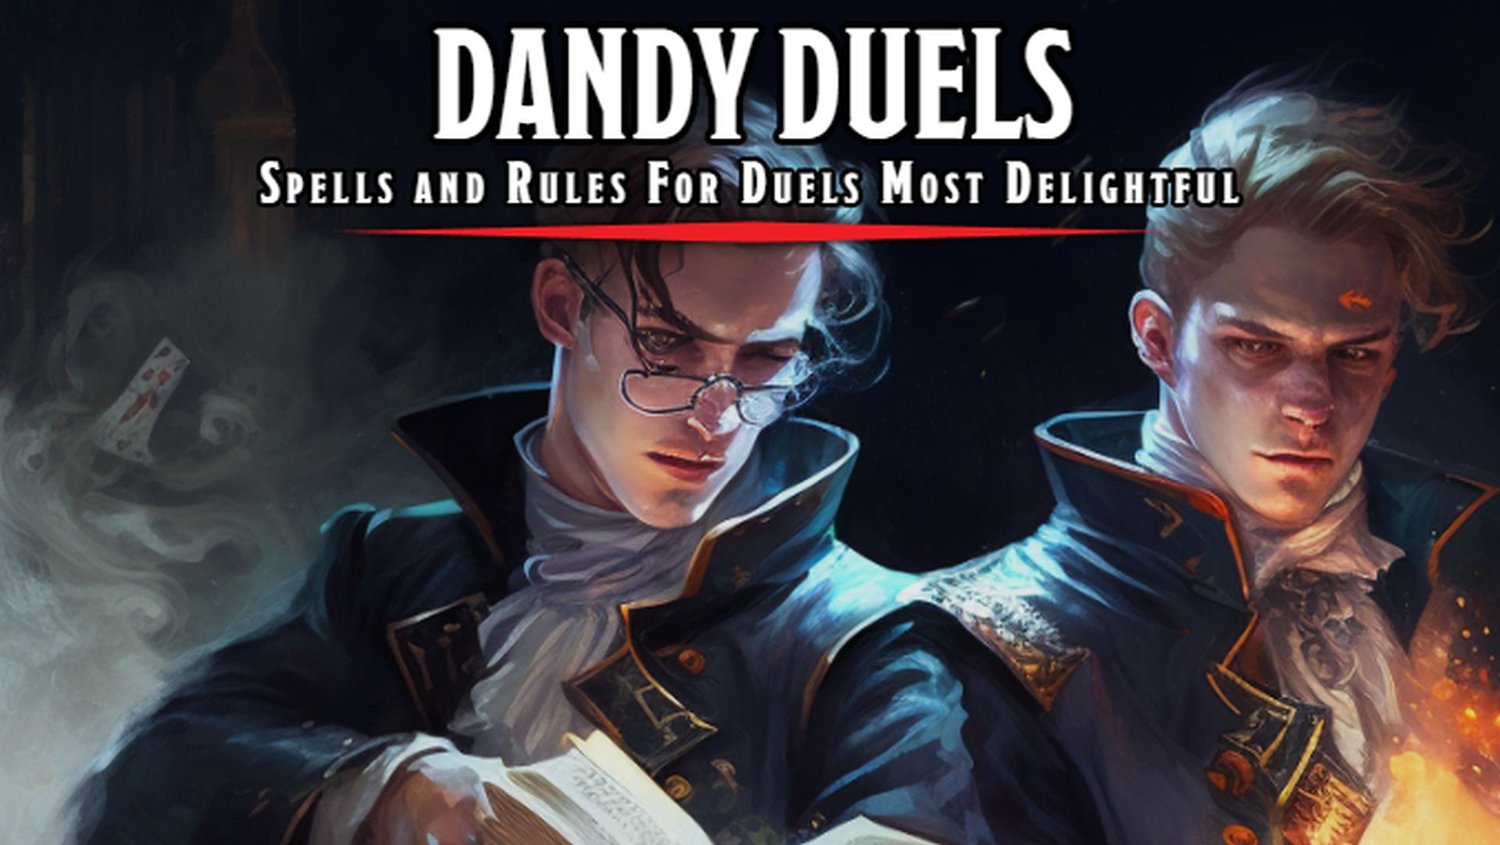 Enjoy Non-Lethal Spells for D&D Dueling in DANDY DUELS